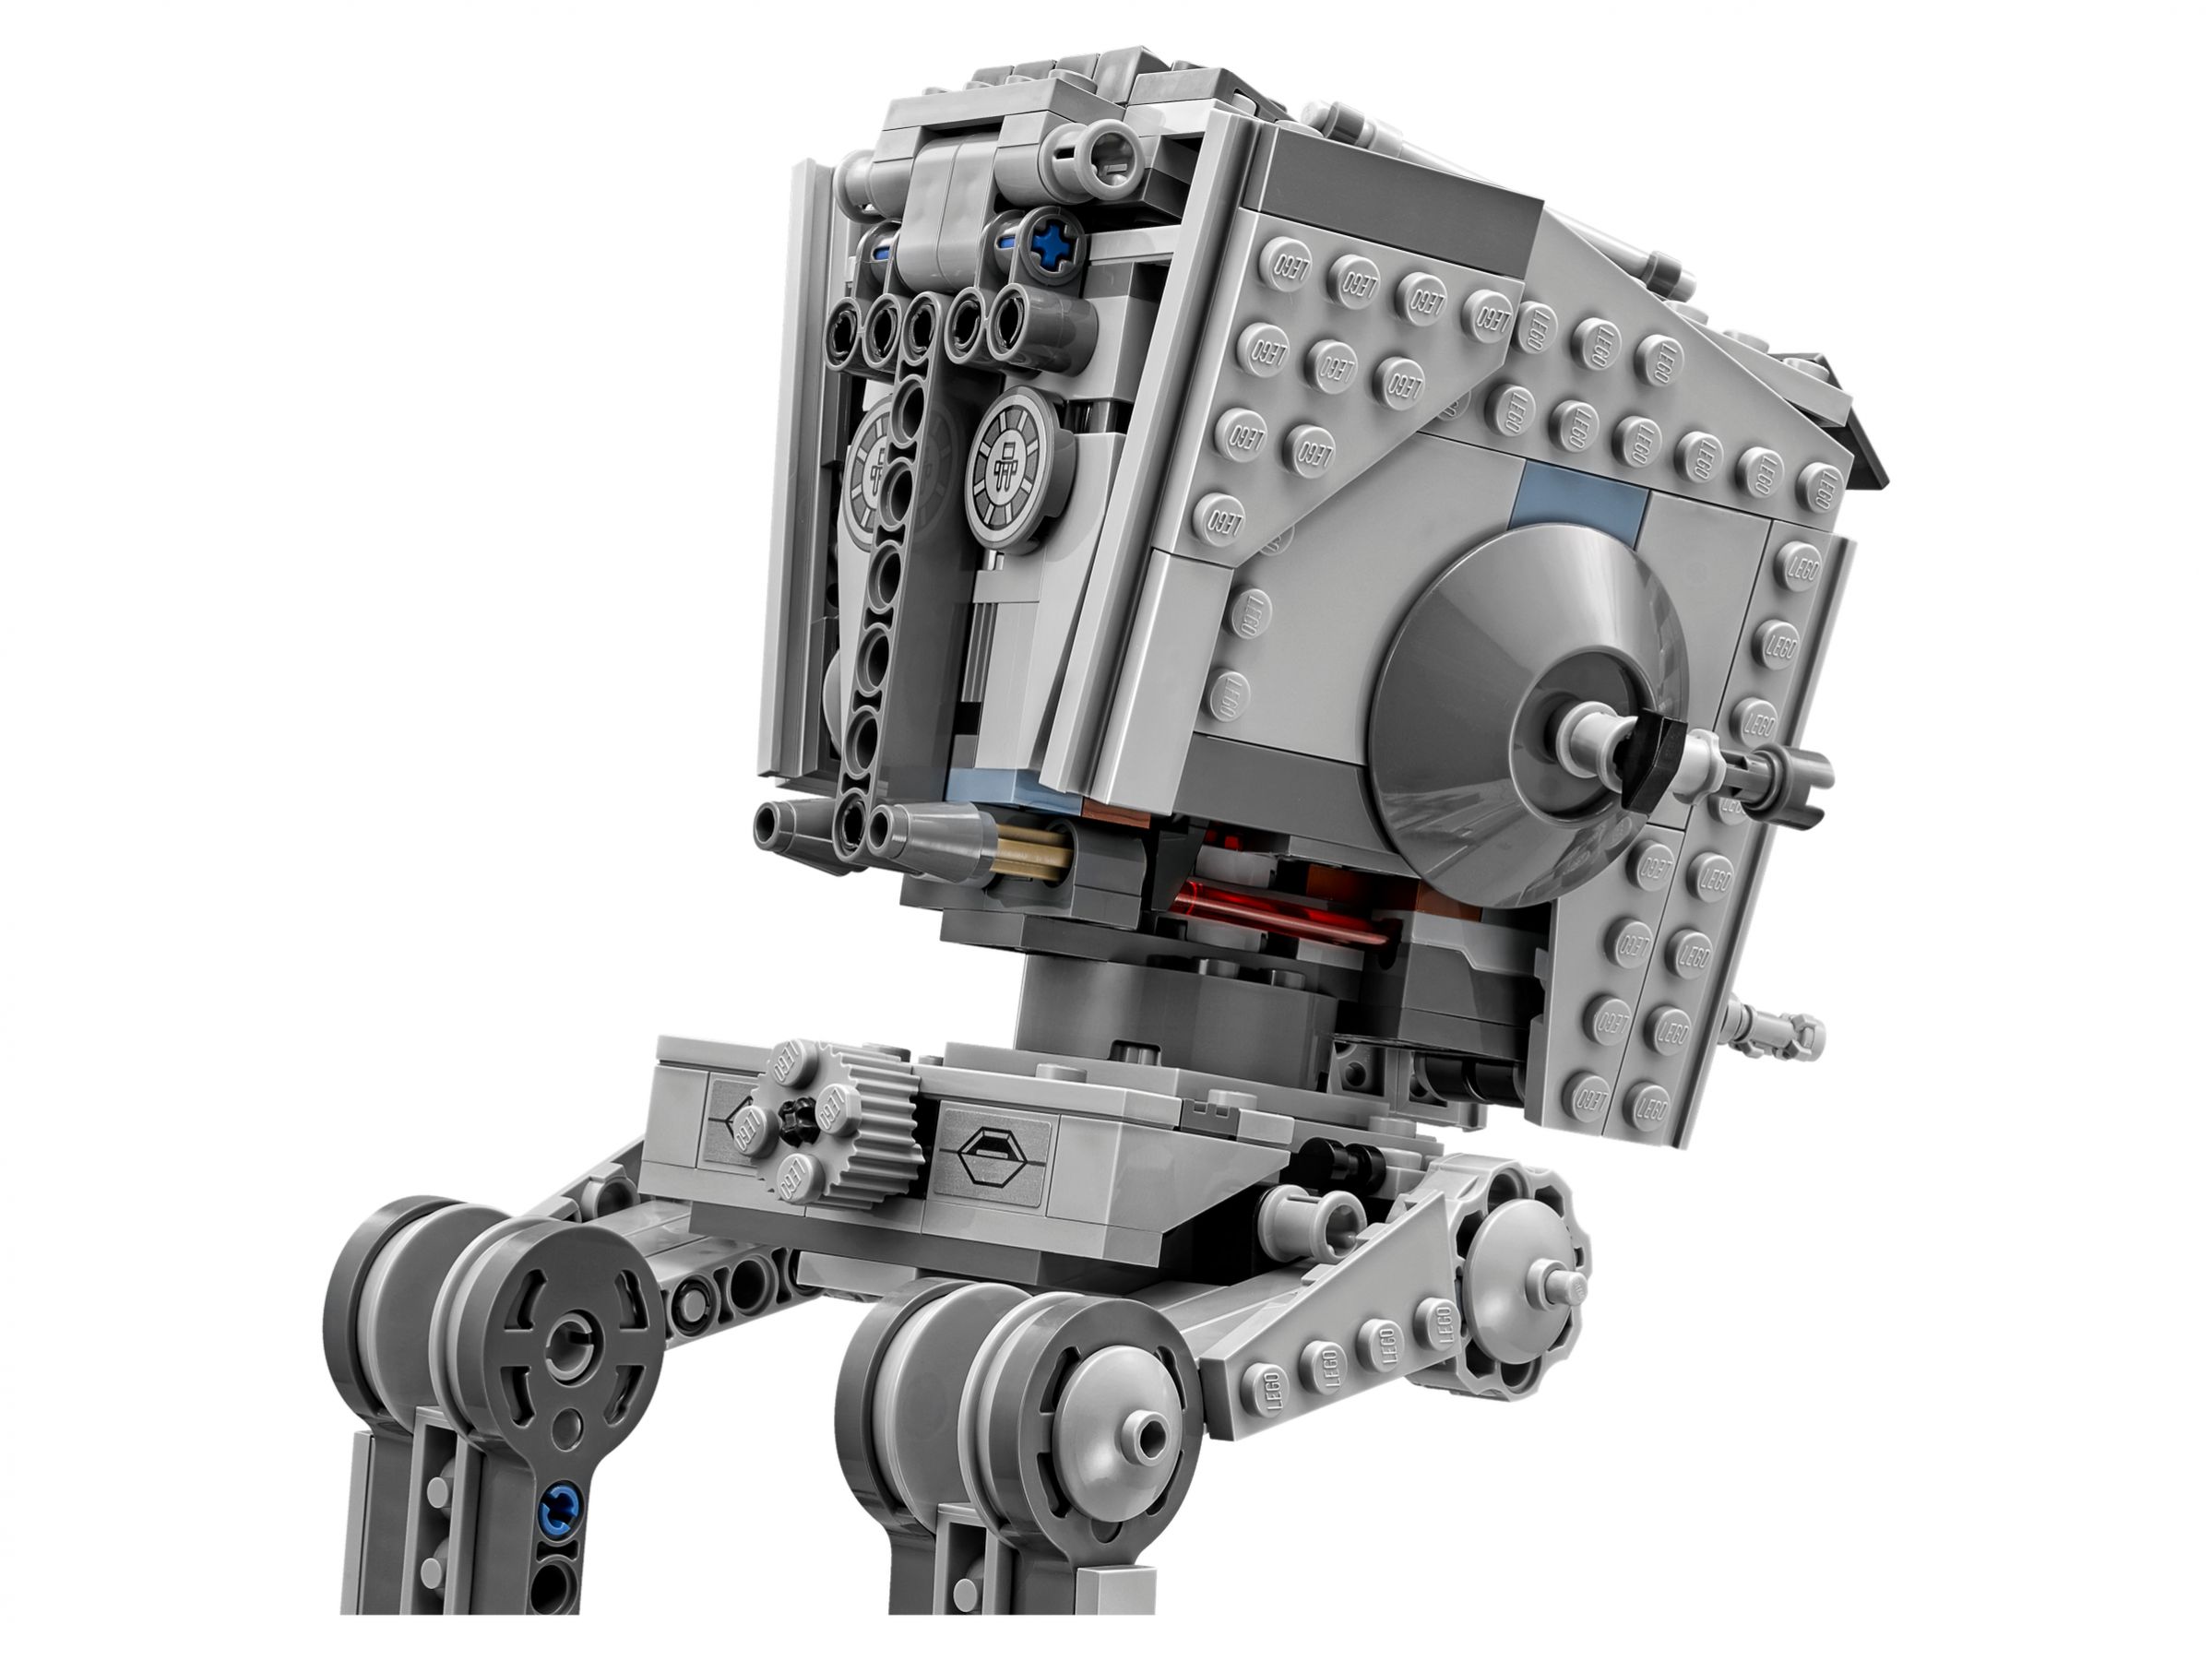 LEGO Star Wars 75153 AT-ST™ Walker LEGO_75153_alt3.jpg